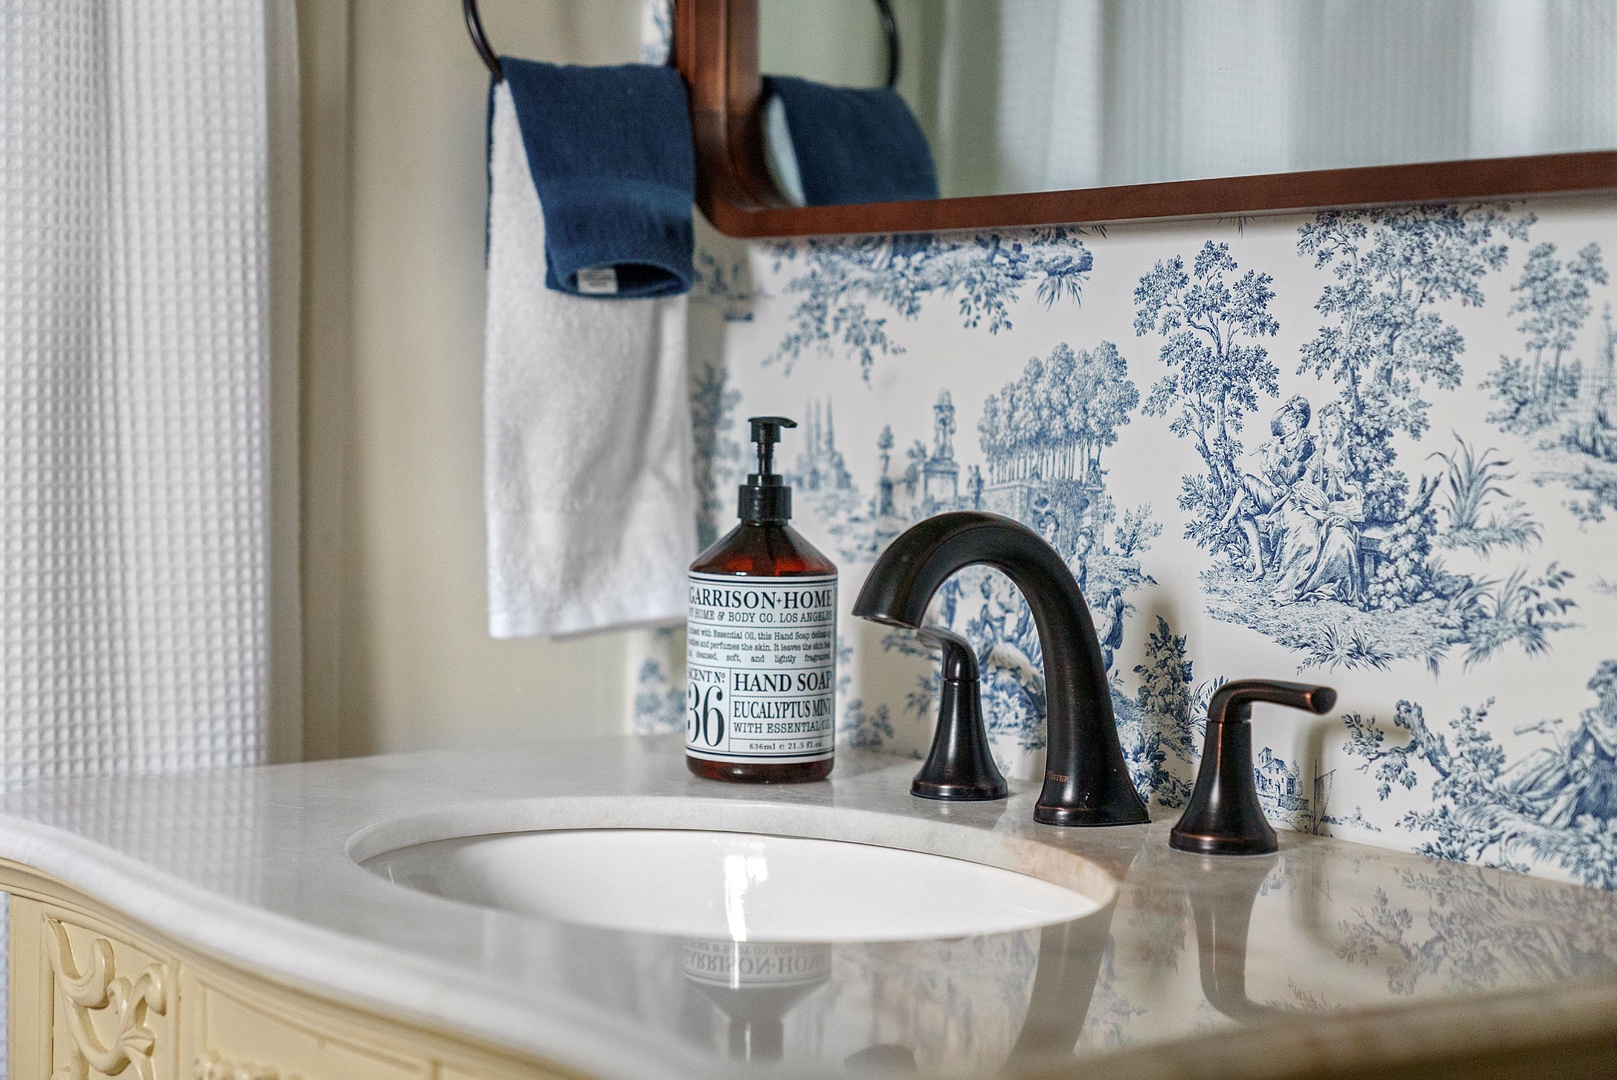 The 1st floor full bath offers a stylish single vanity & shower/tub combo